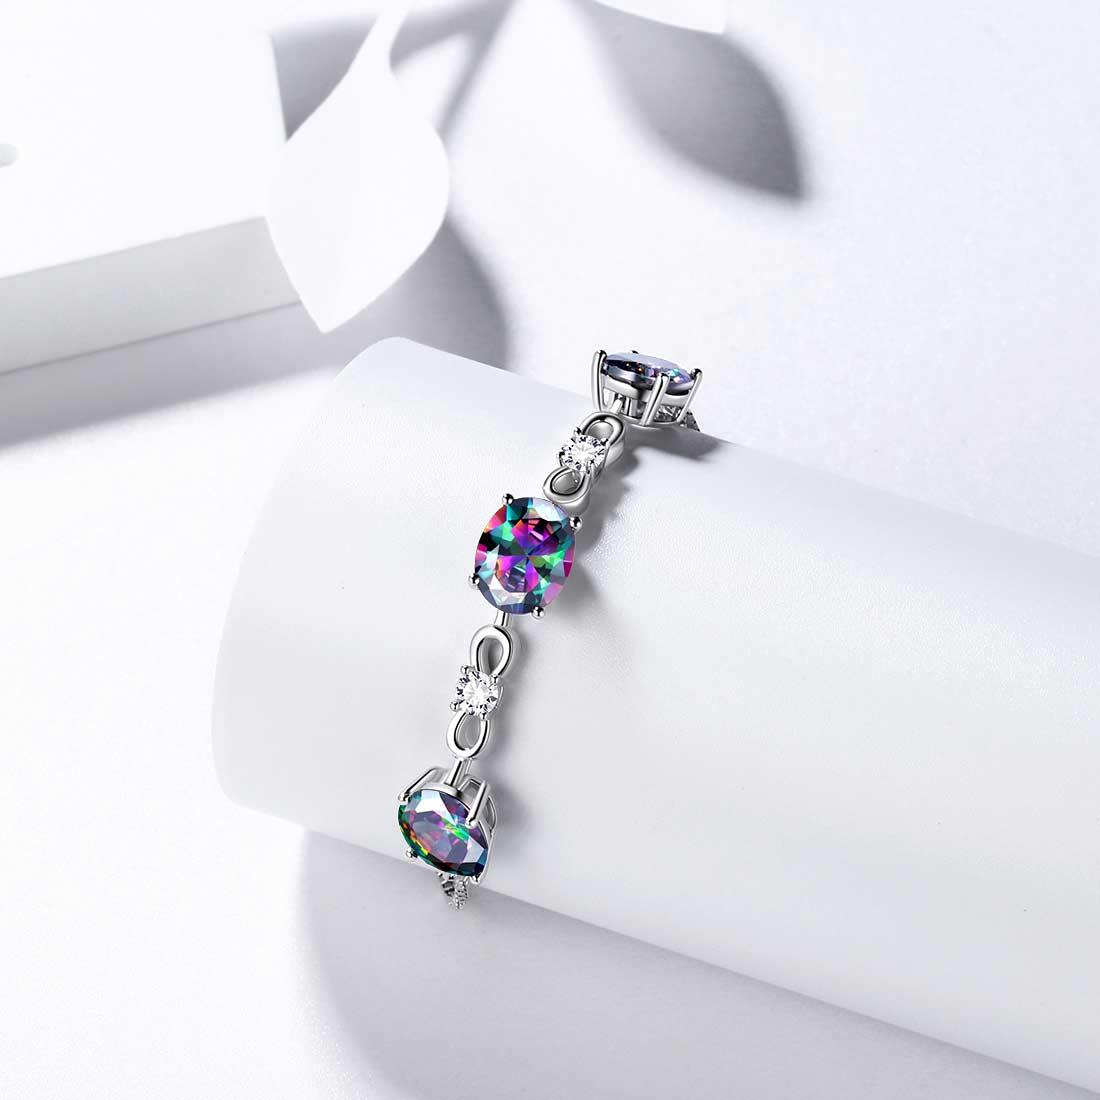 Designer Rainbow Mystic Topaz Bangle 925 Sterling Silver Cuff Bracelet  jewelry  eBay